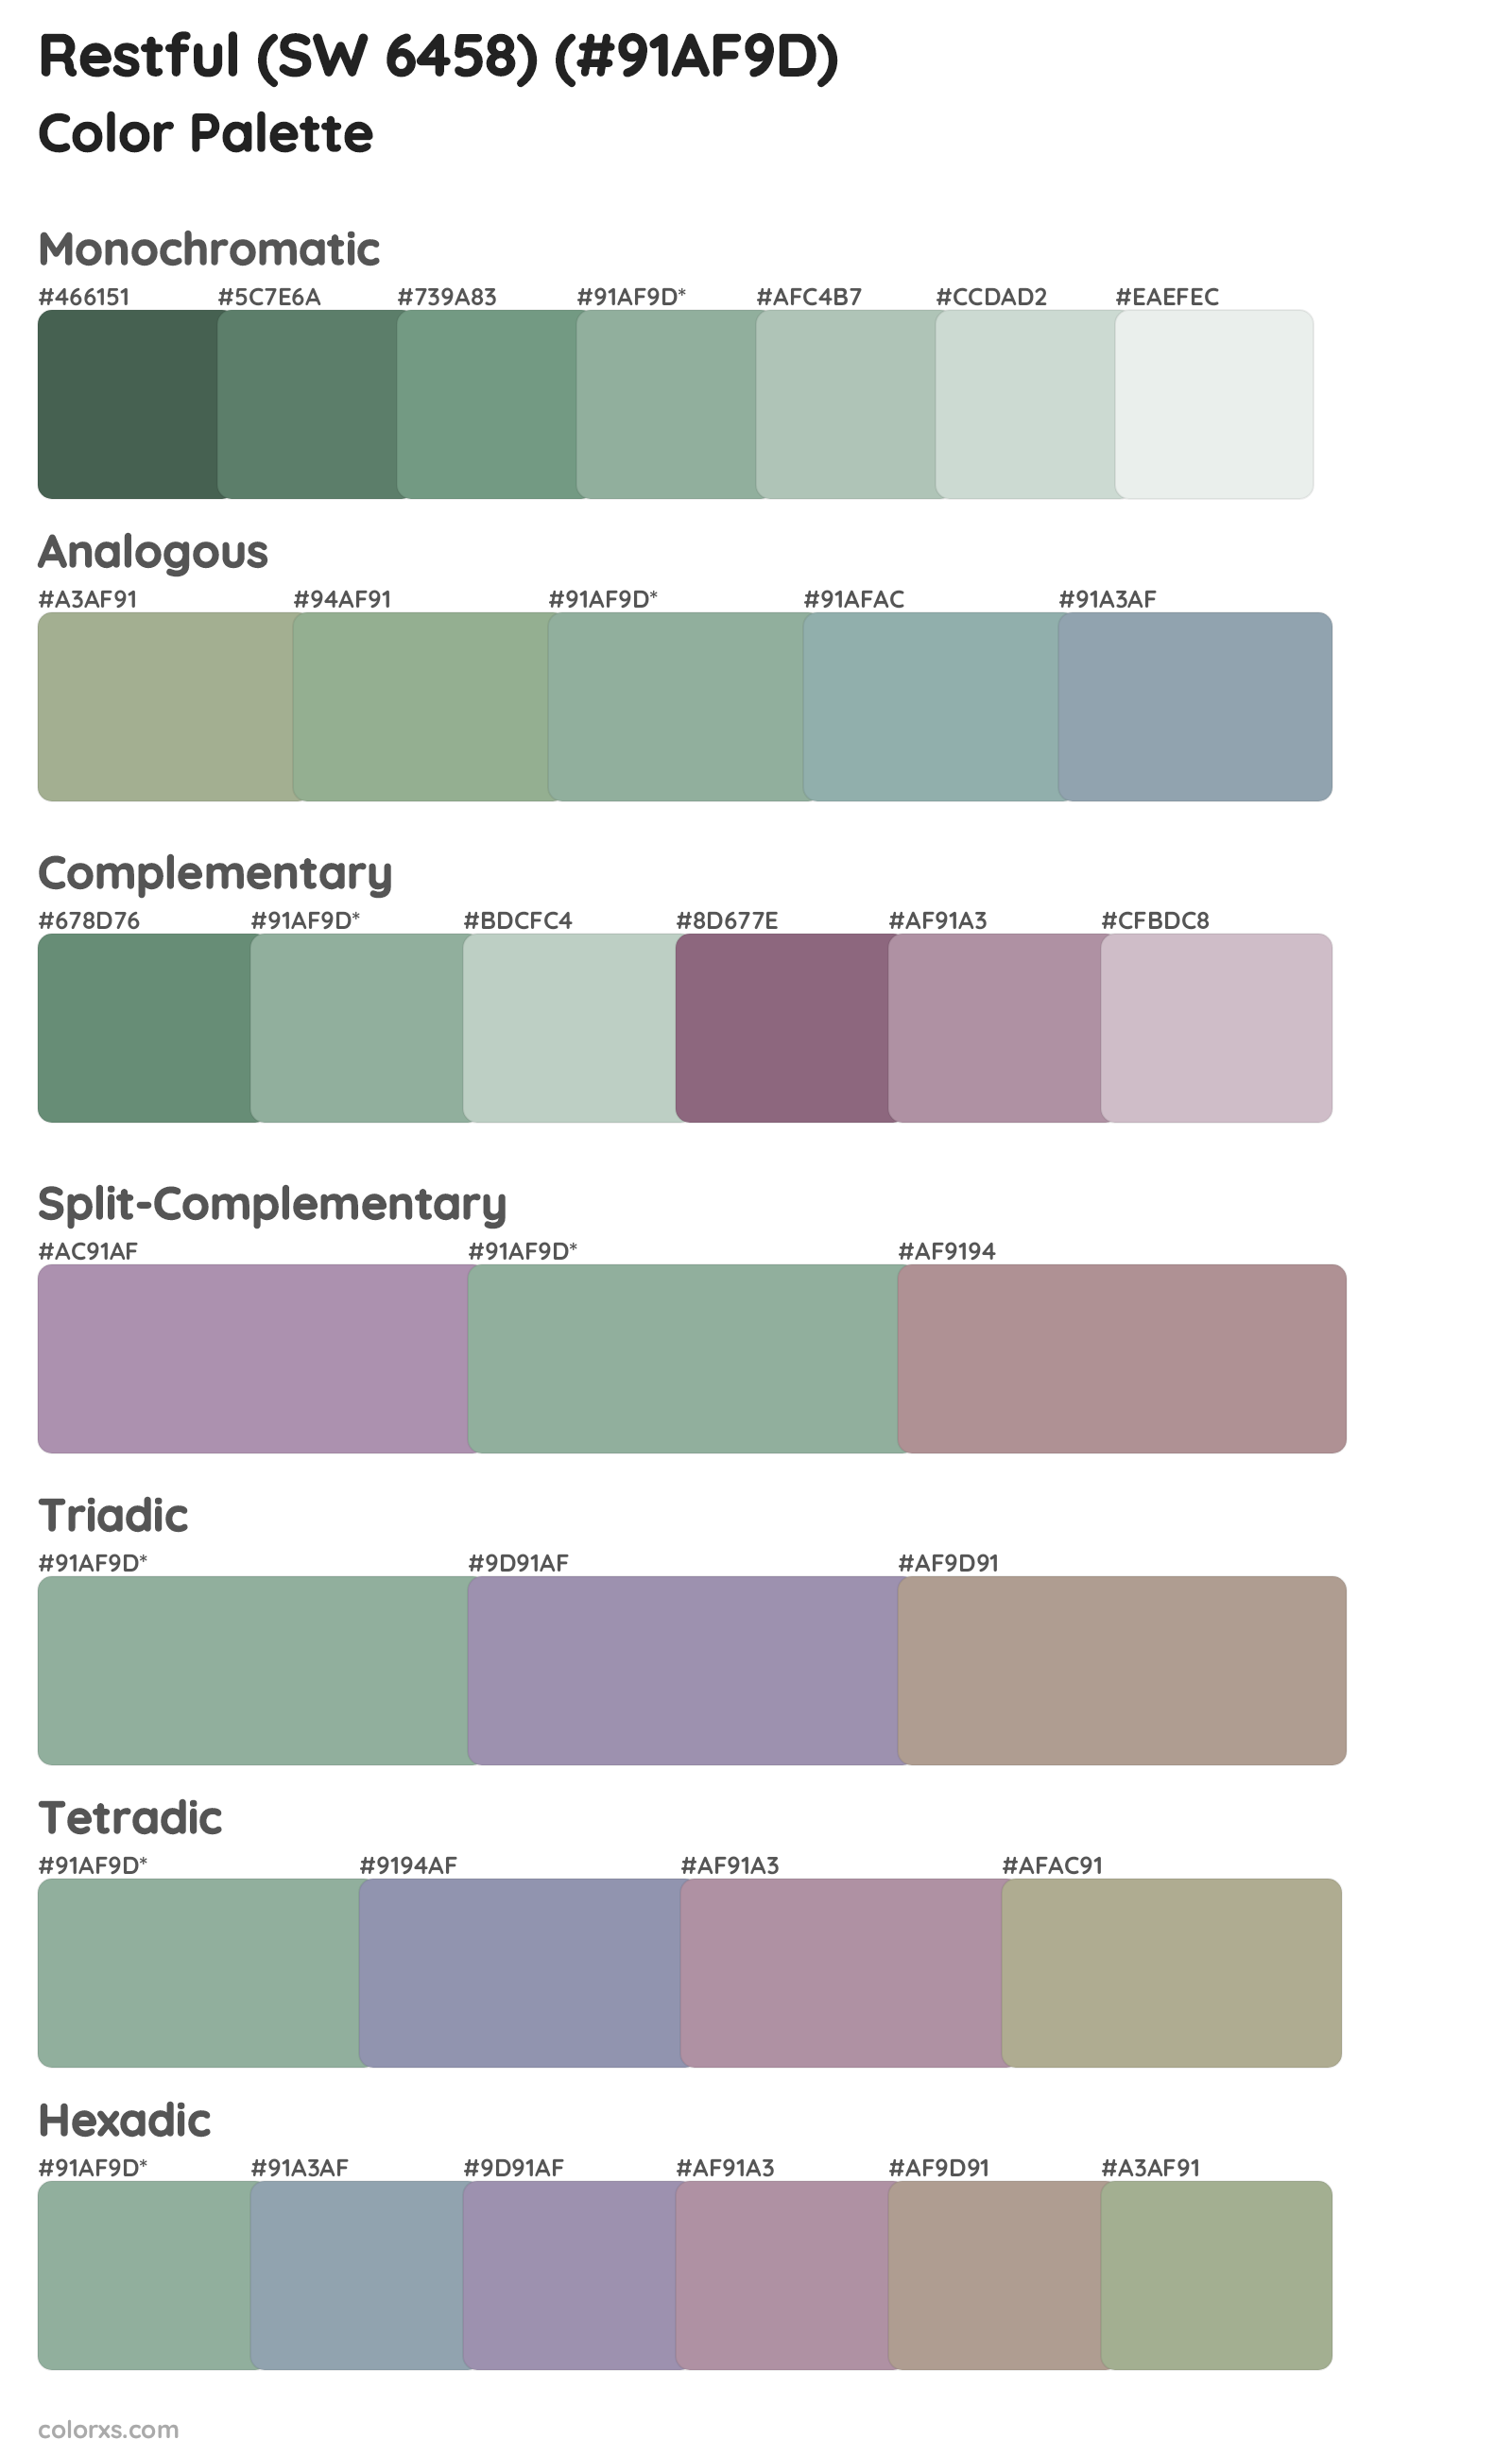 Restful (SW 6458) Color Scheme Palettes